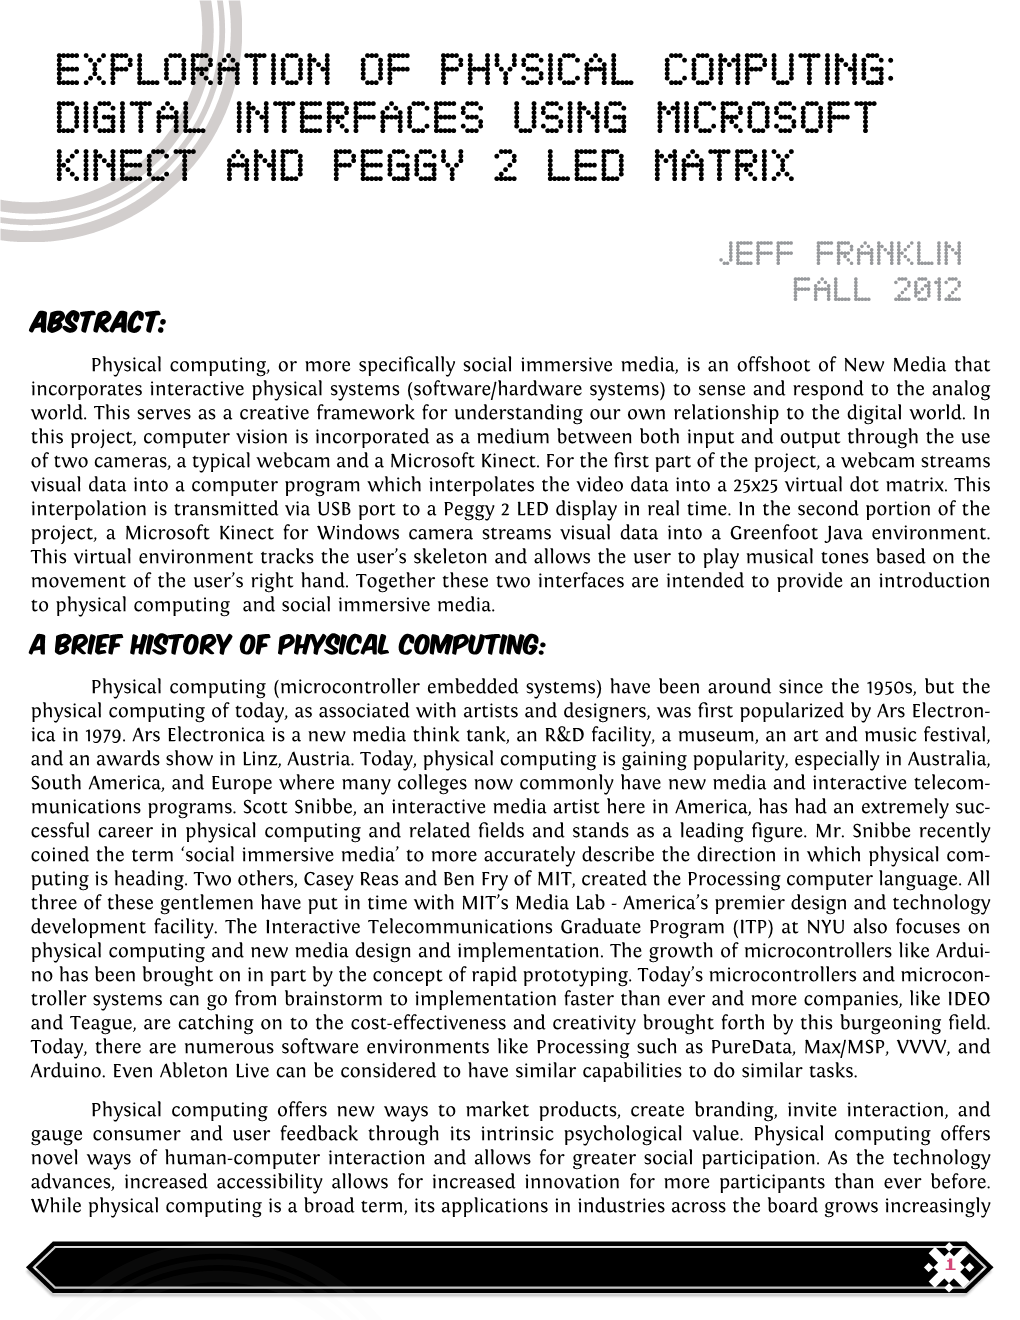 Exploration of Physical Computing: Digital Interfaces Using Microsoft Kinect and Peggy 2 LED Matrix